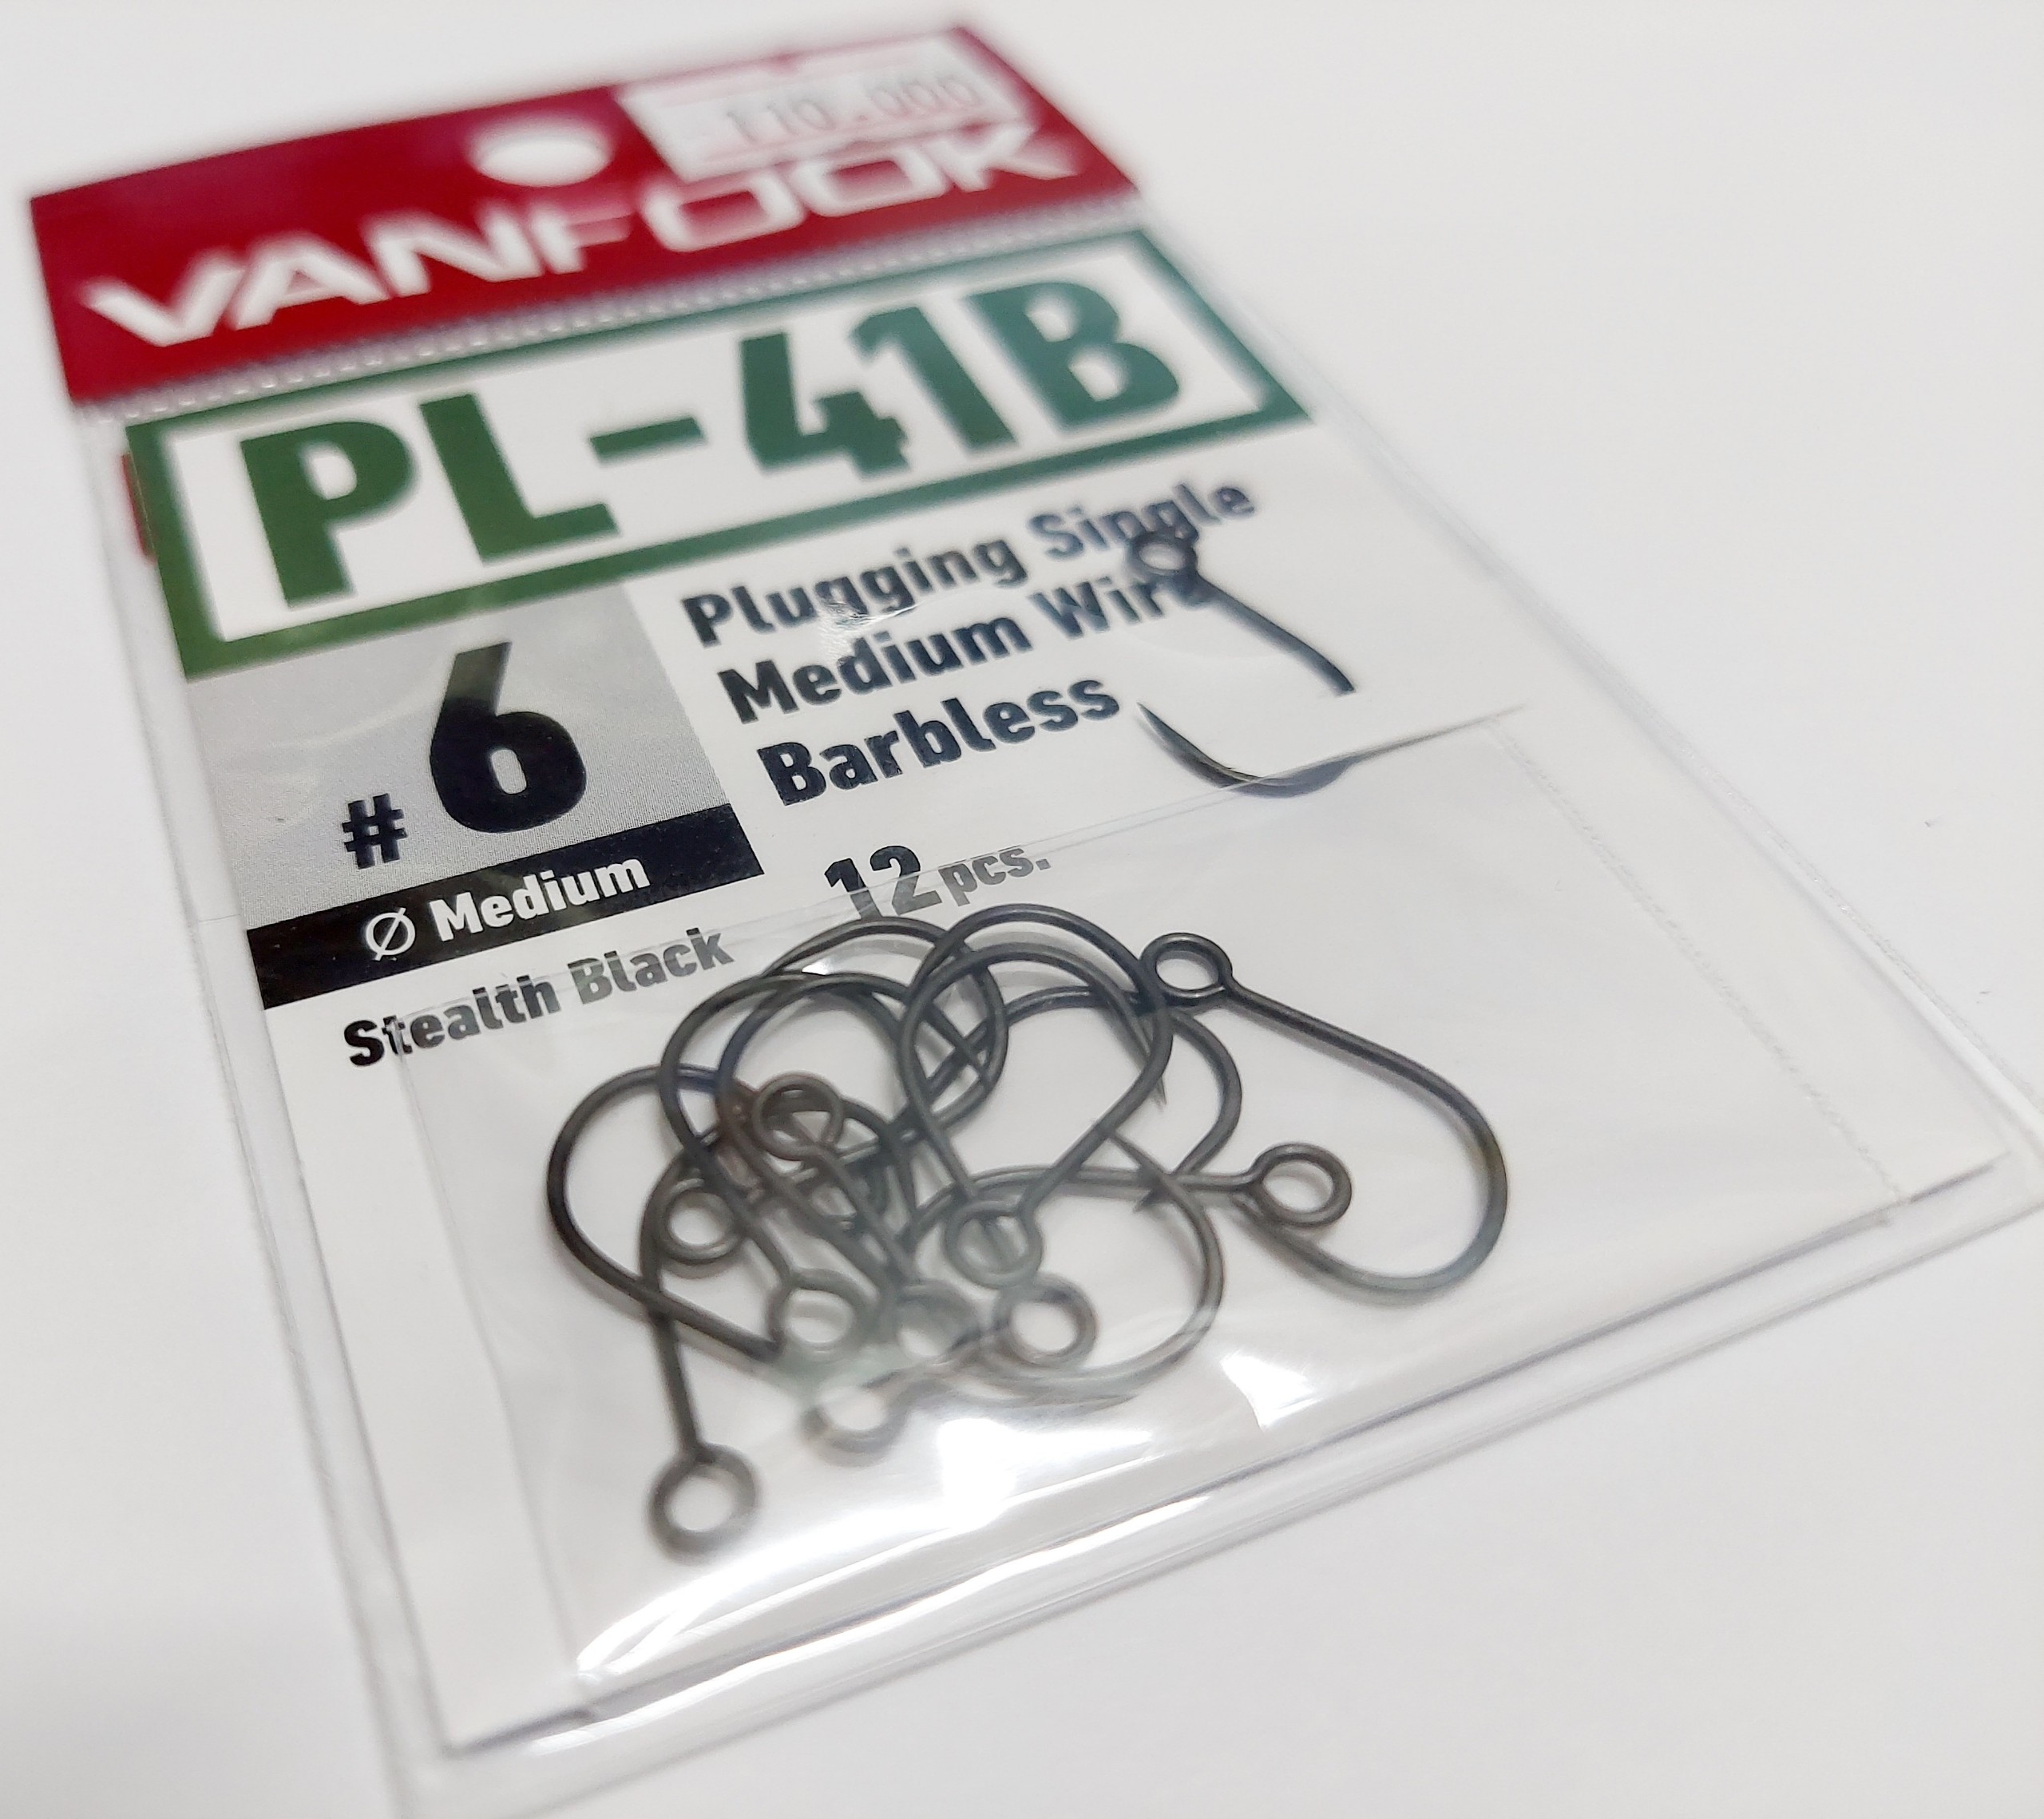 PL-41B Plugging Single Medium Wire Barbless Hooks